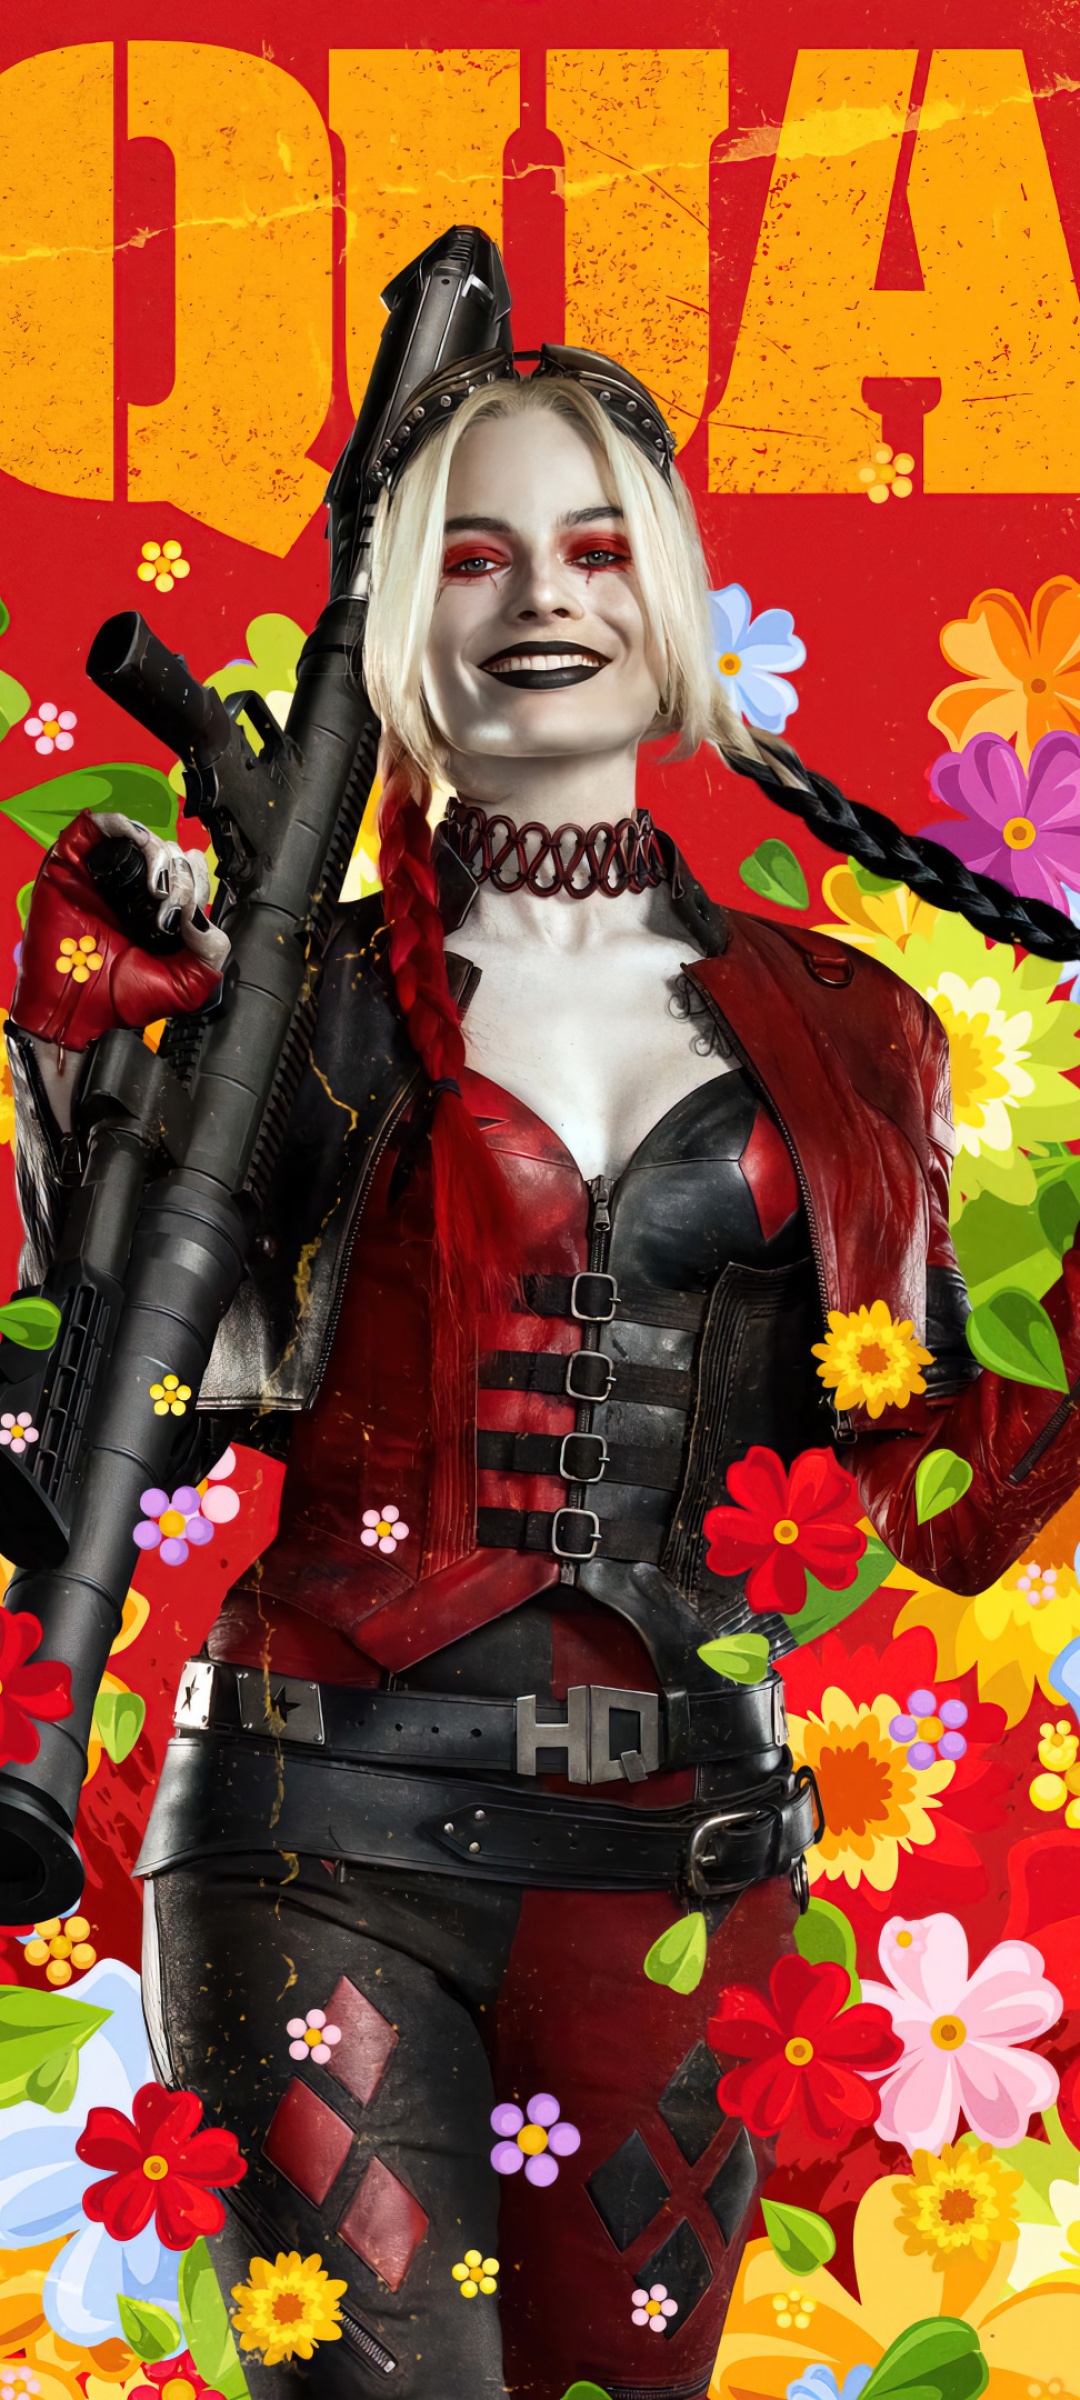 Harley Quinn 4K Wallpaper, Margot Robbie, The Suicide Squad, 2021